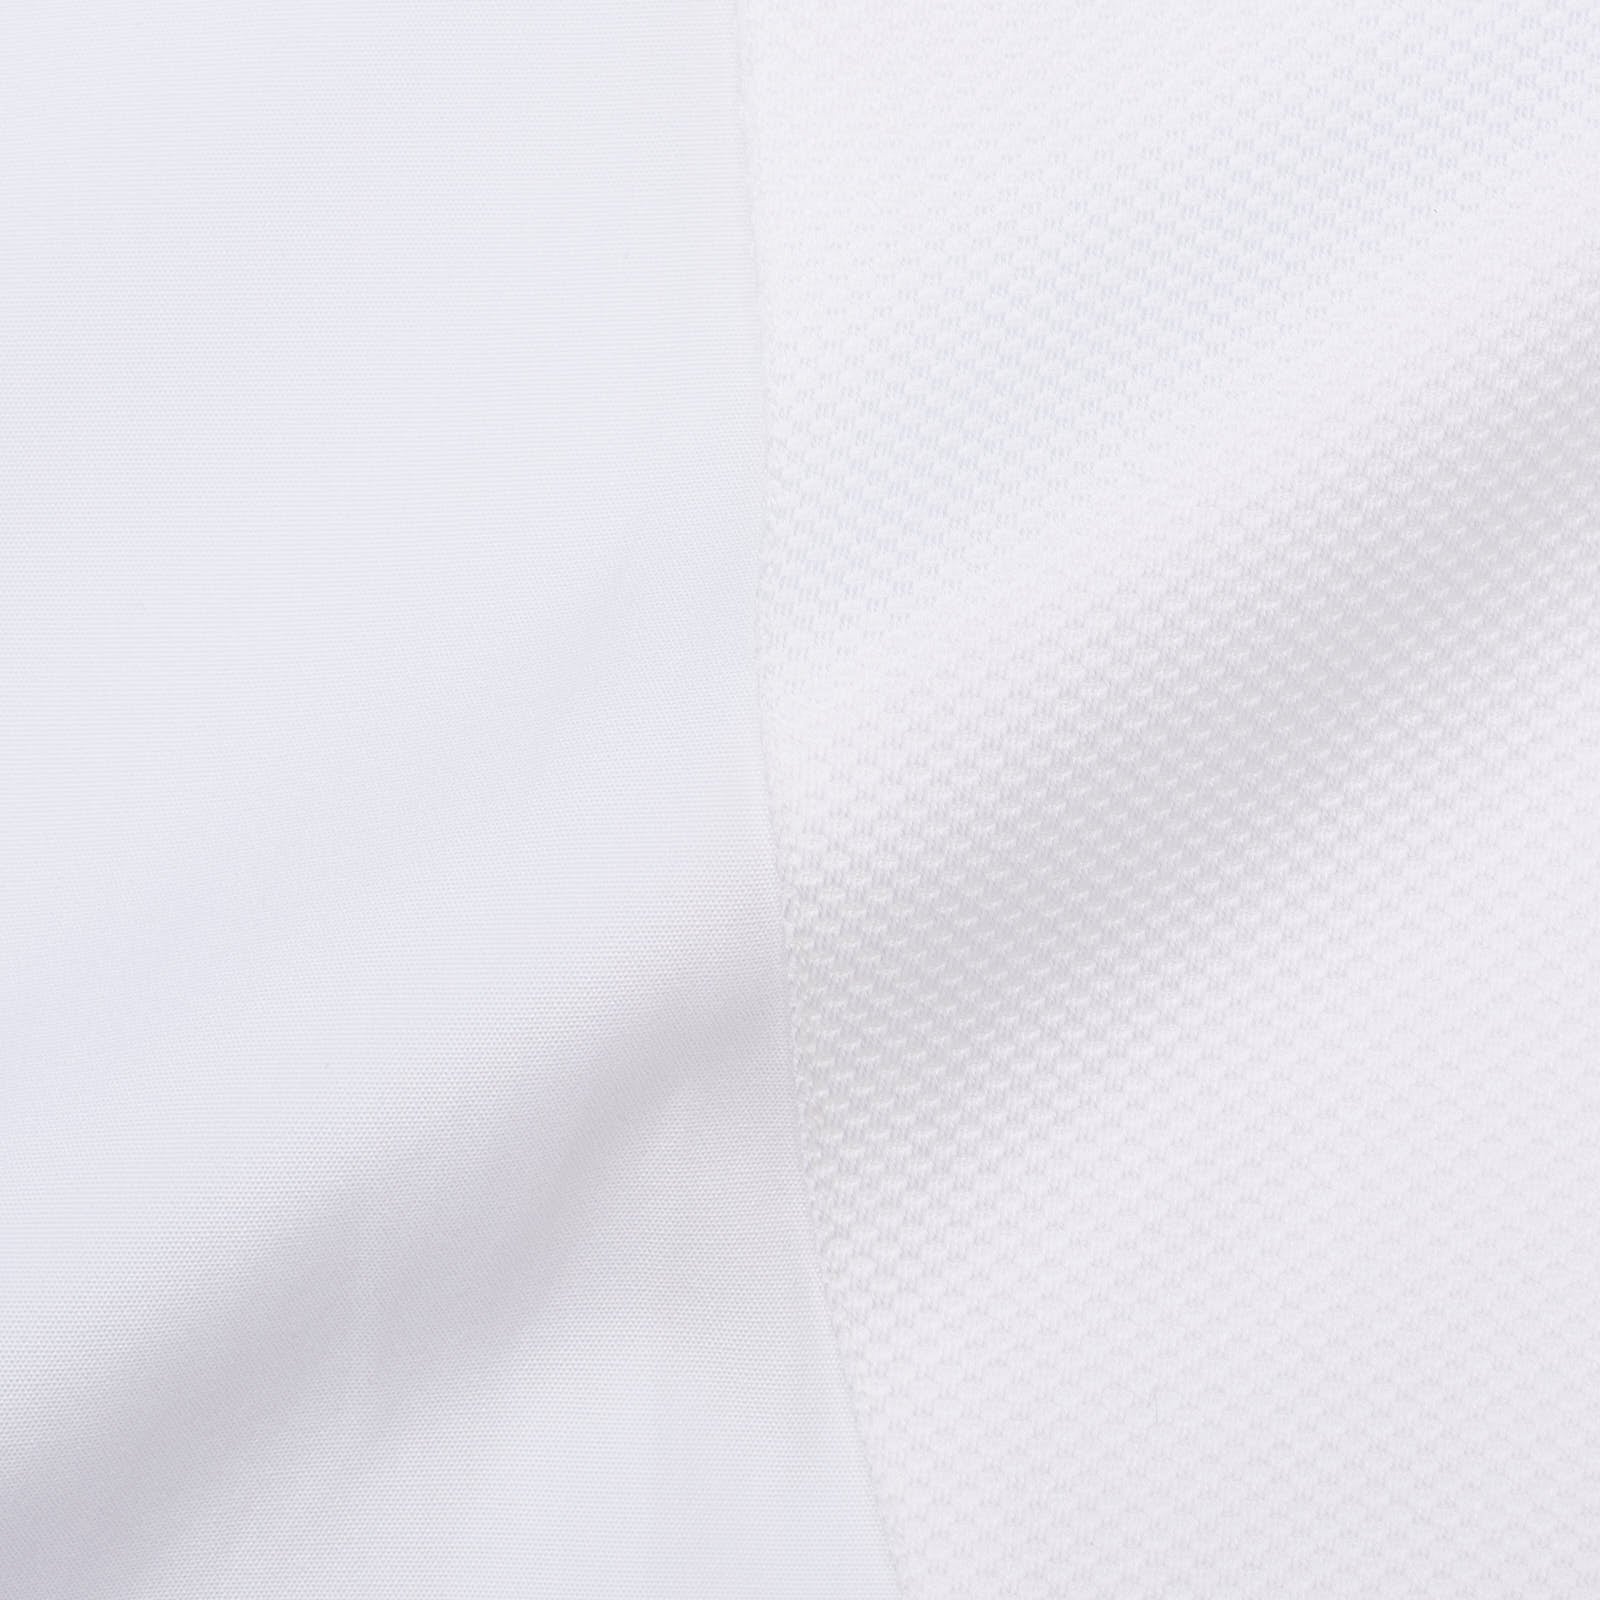 TOM FORD White Cotton French Cuff Tuxedo Formal Shirt EU 41 NEW US 16